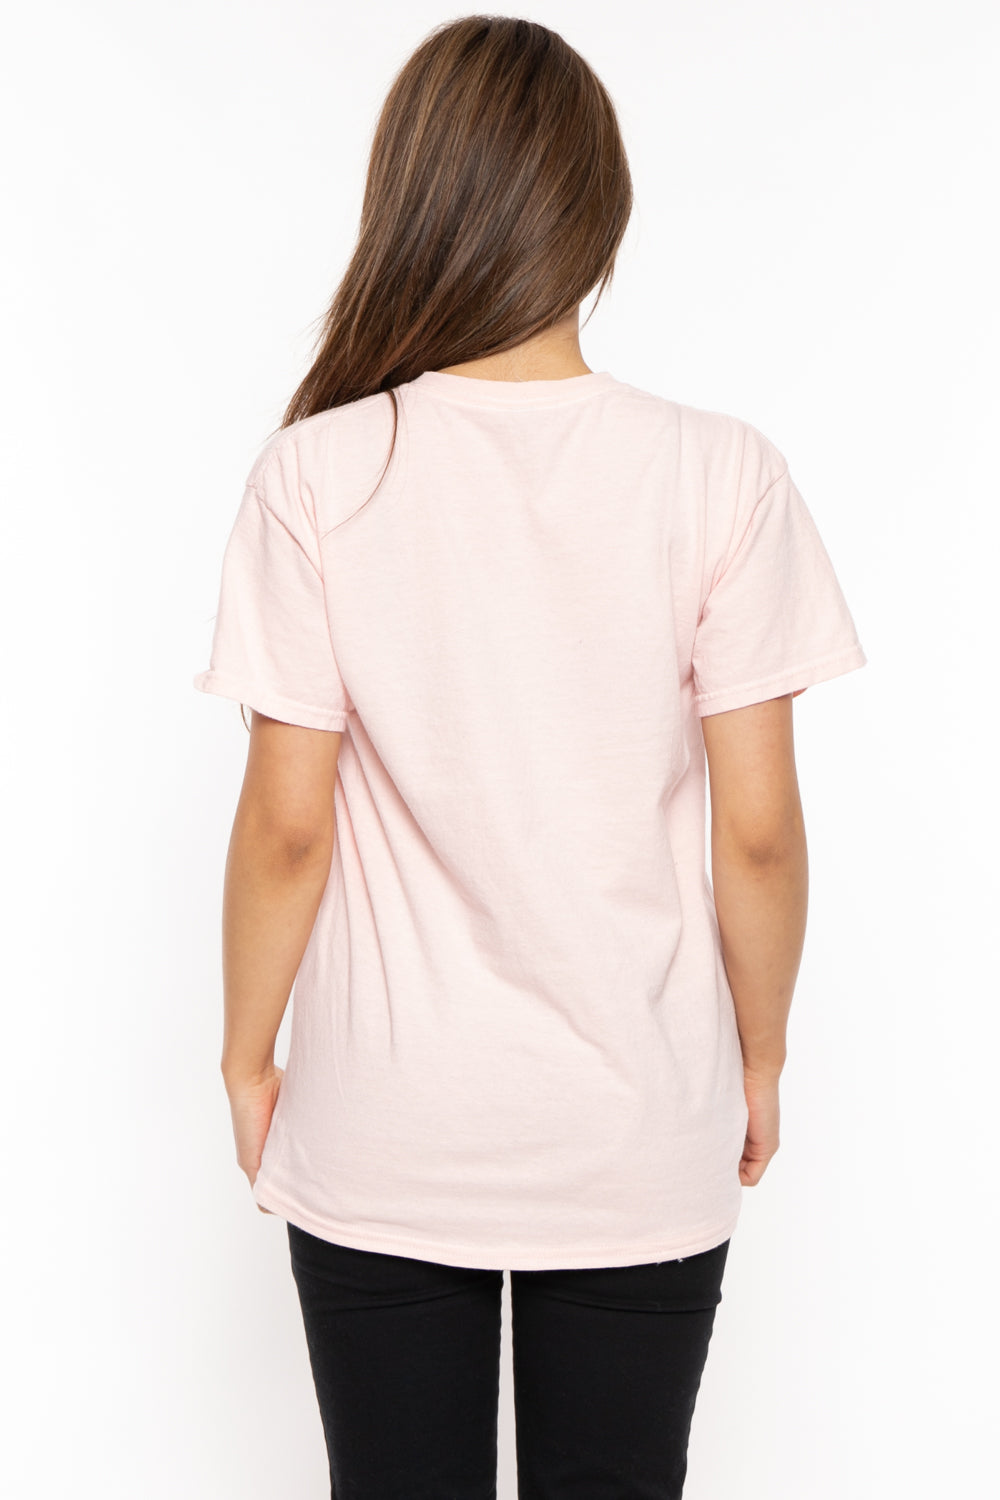 Give Me Chocolate - Bobby Jack Garment-Dyed Boyfriend T-Shirt - Pink